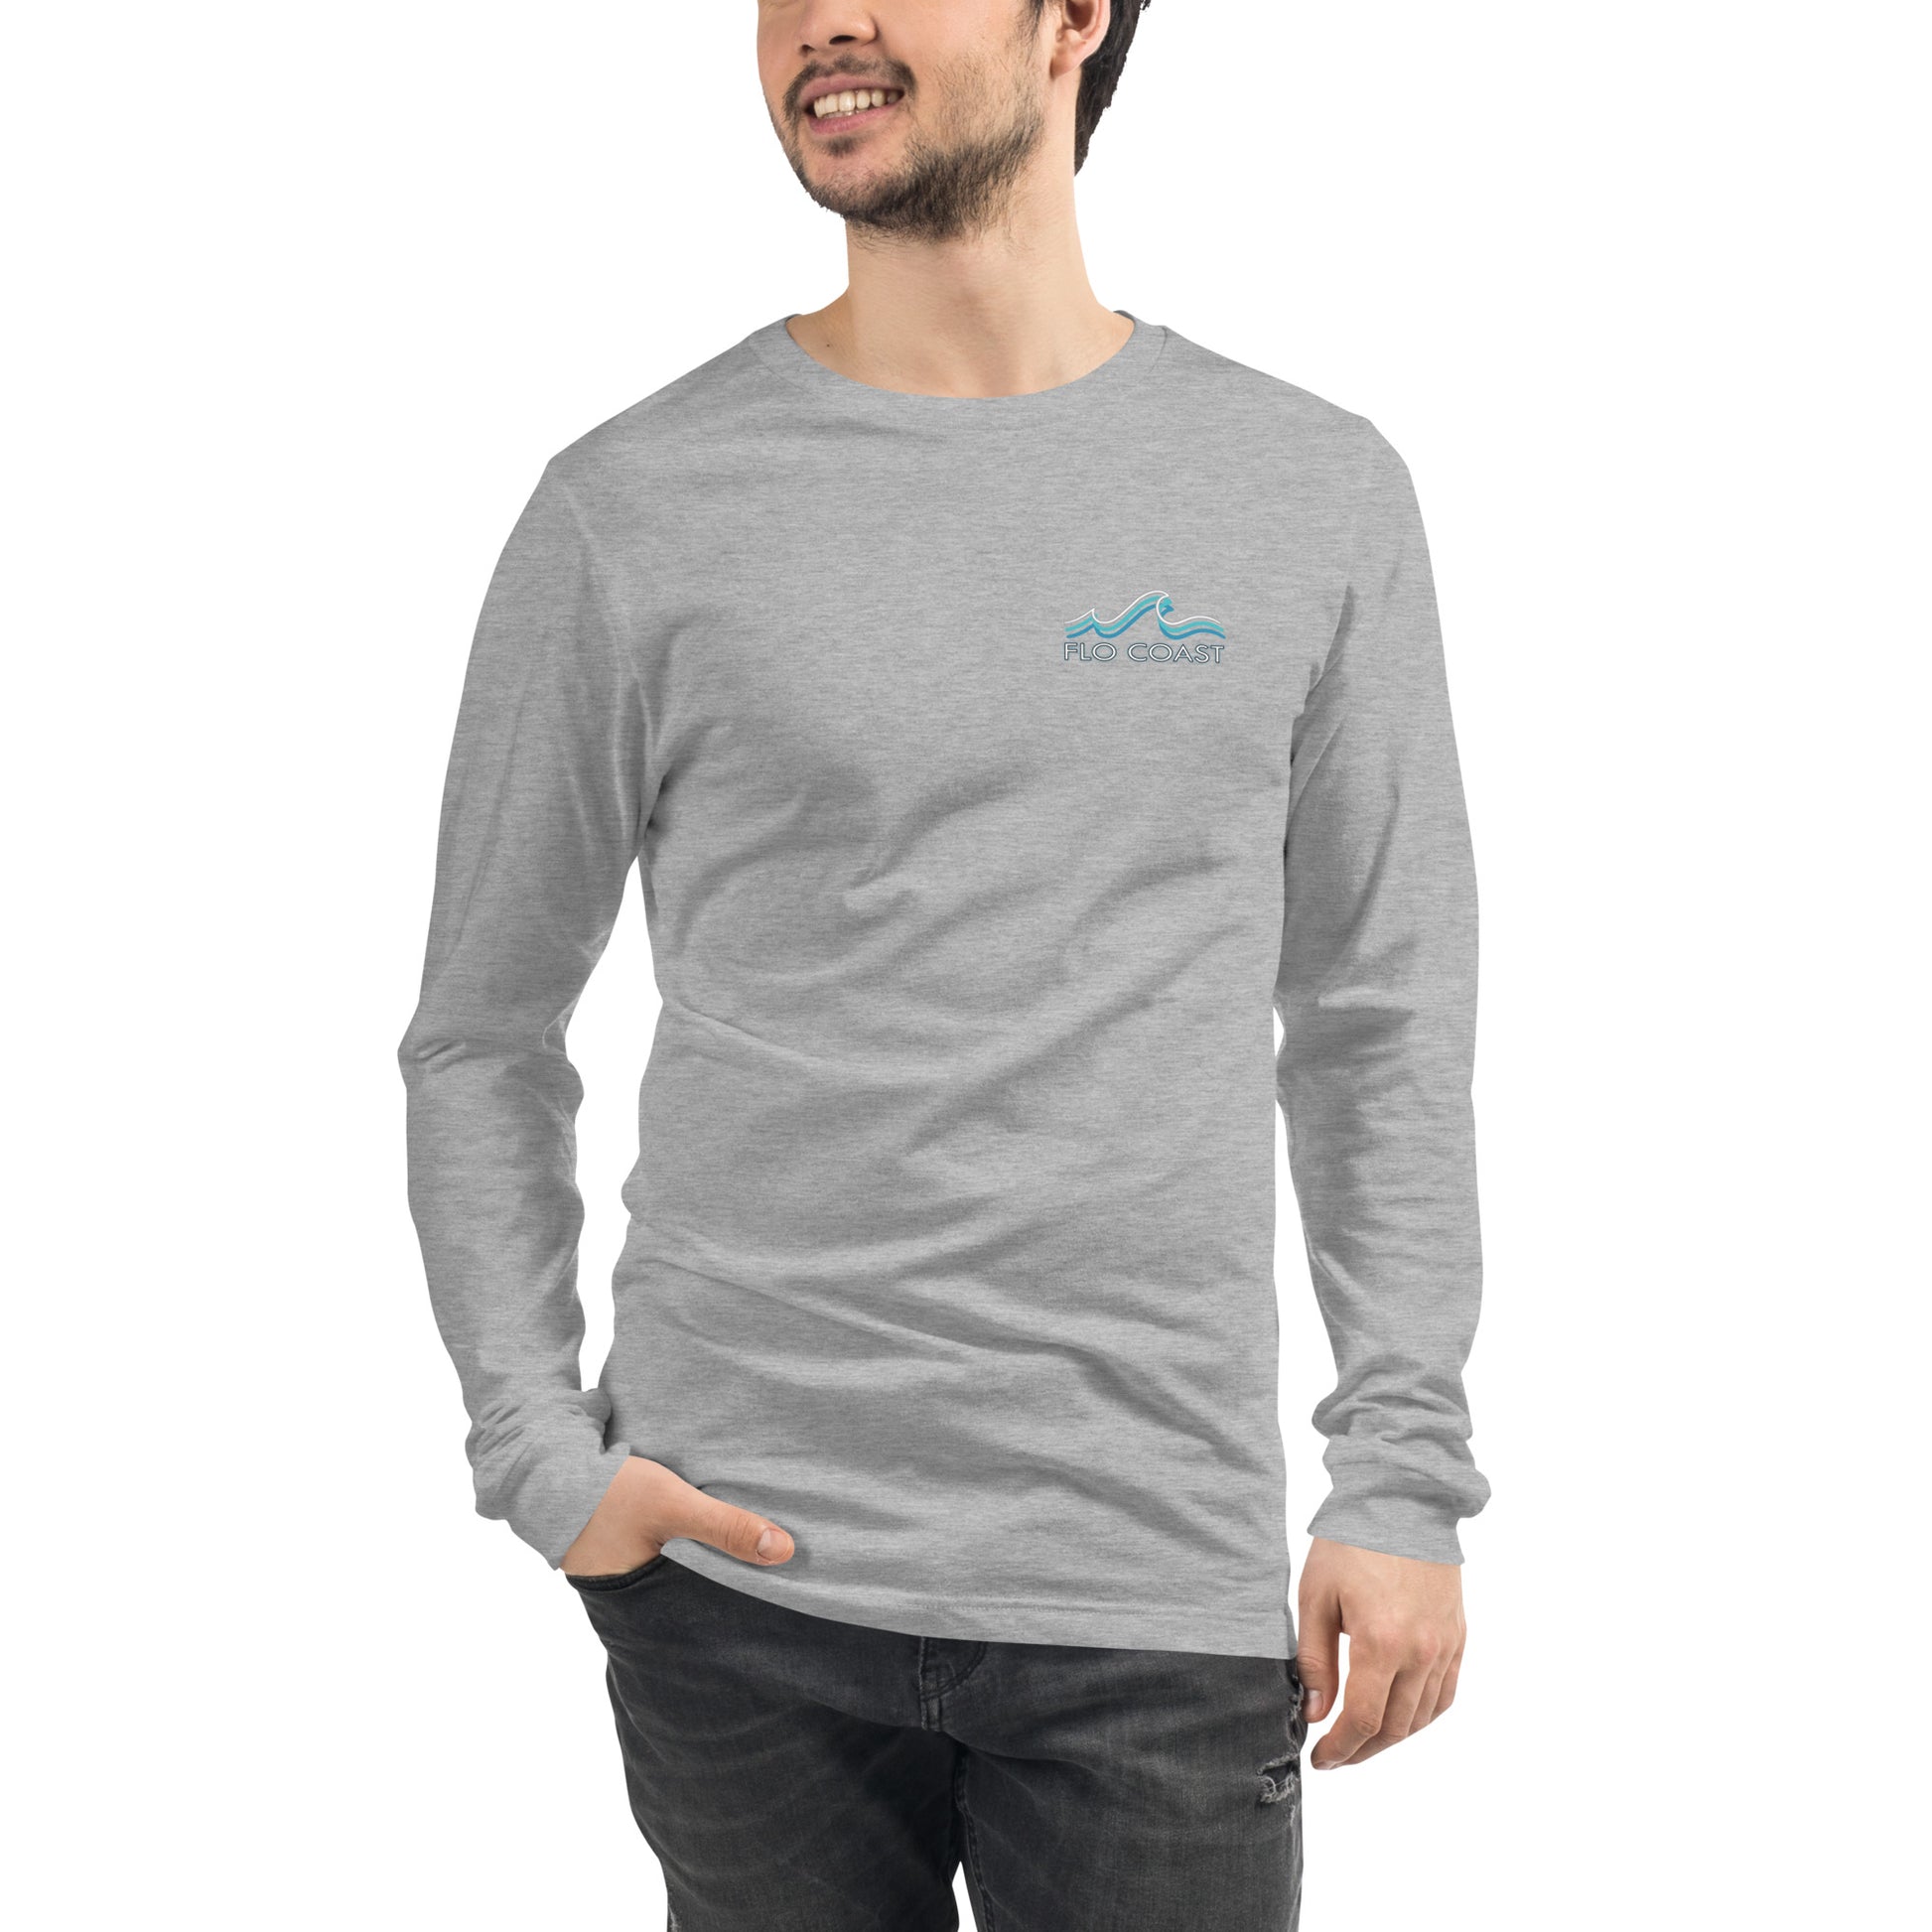 Flo Coast Signature Unisex Long Sleeve Tee-T-Shirt-Flo Coast Apparel